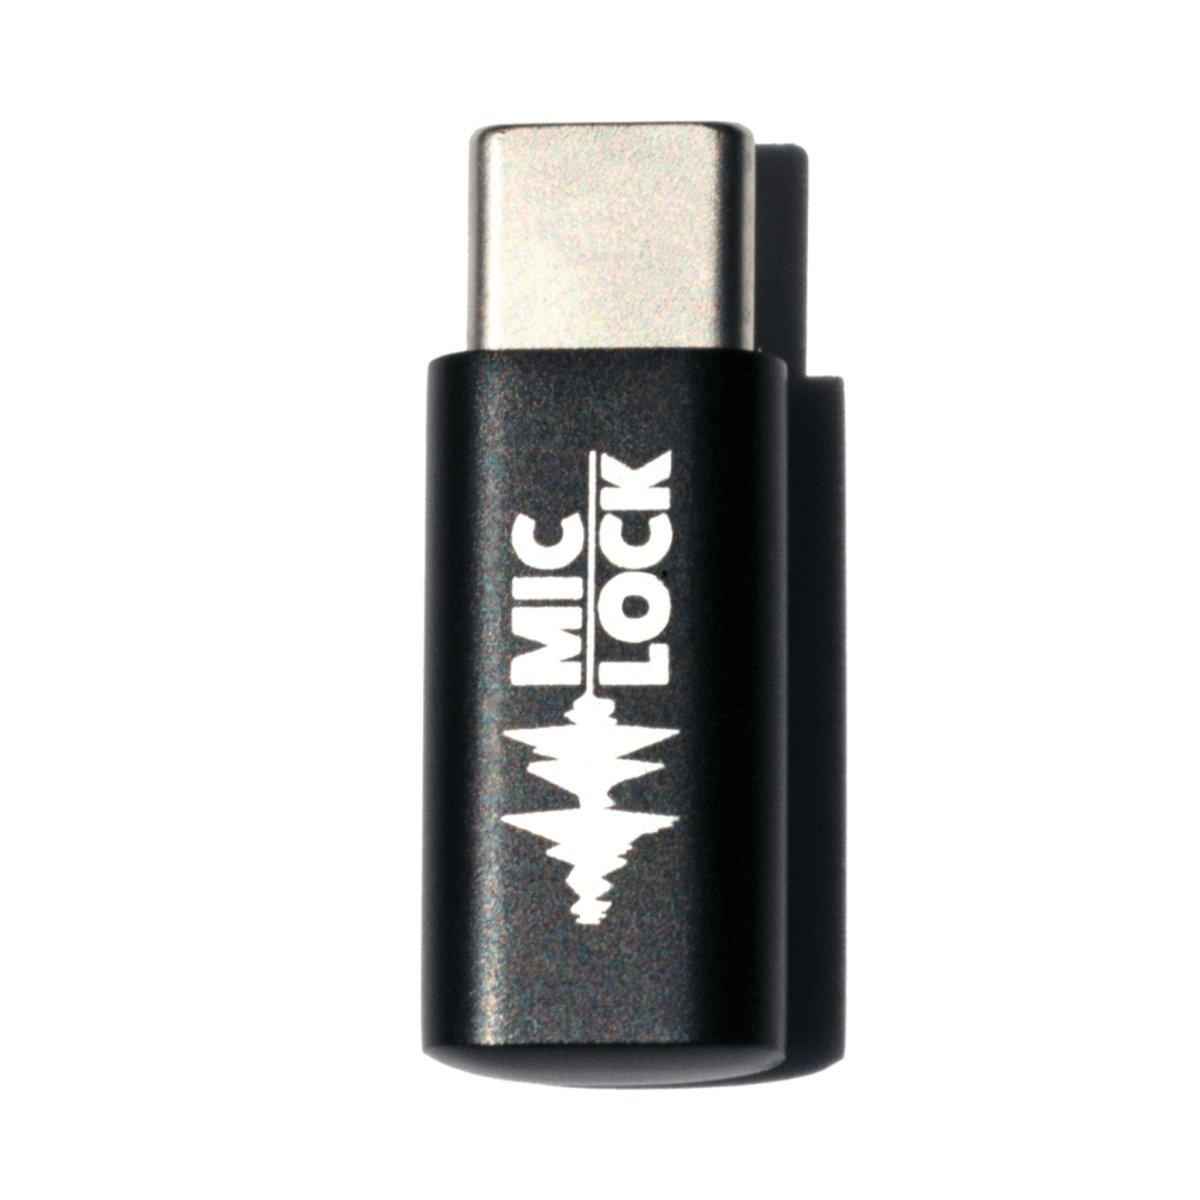 Mic-Lock USB-C Single-Ended Microphone Blocker - Black - Mic-Lock